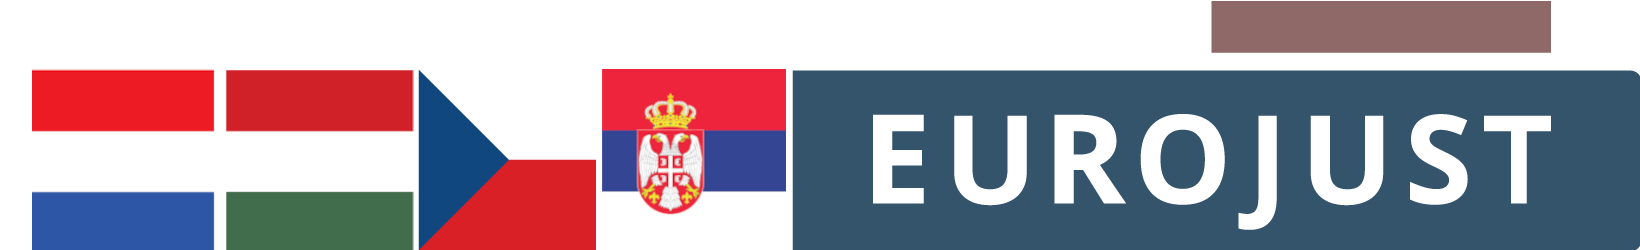 Flags of NL, HU, CZ, SR, logo of Eurojust